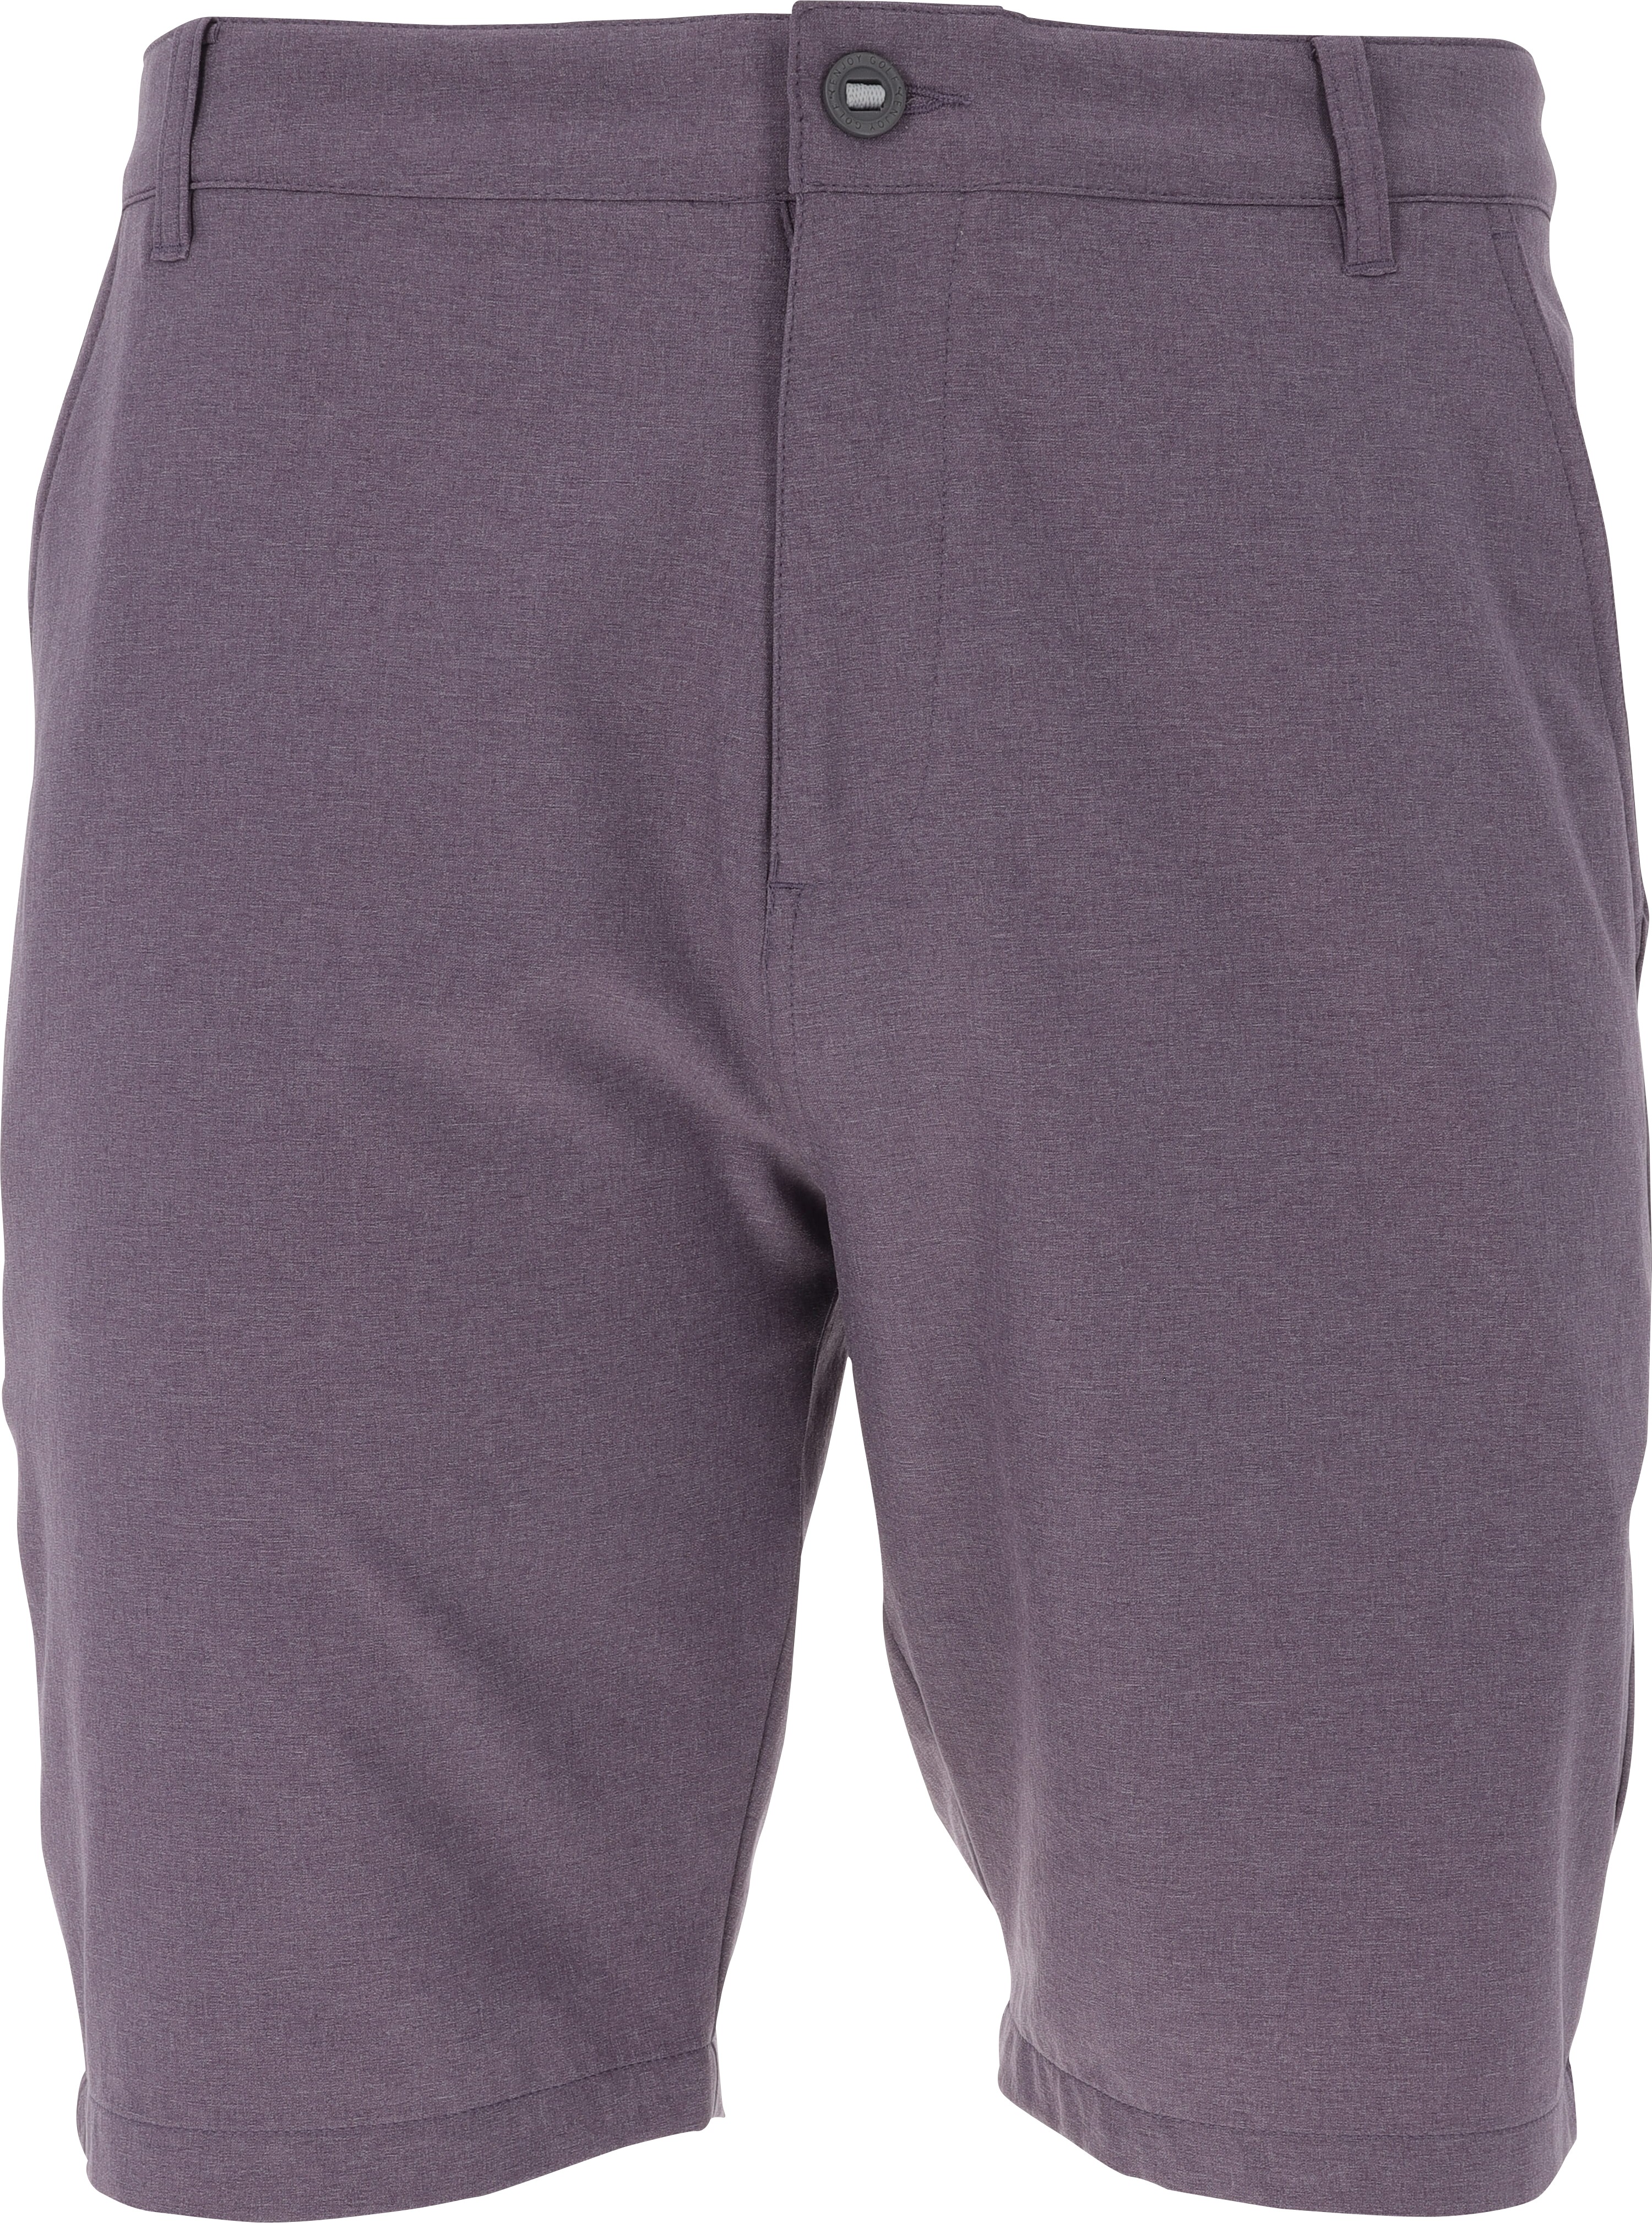 Puma 101 North Flat Front Shorts Men Choose Size & Color - image 1 of 1